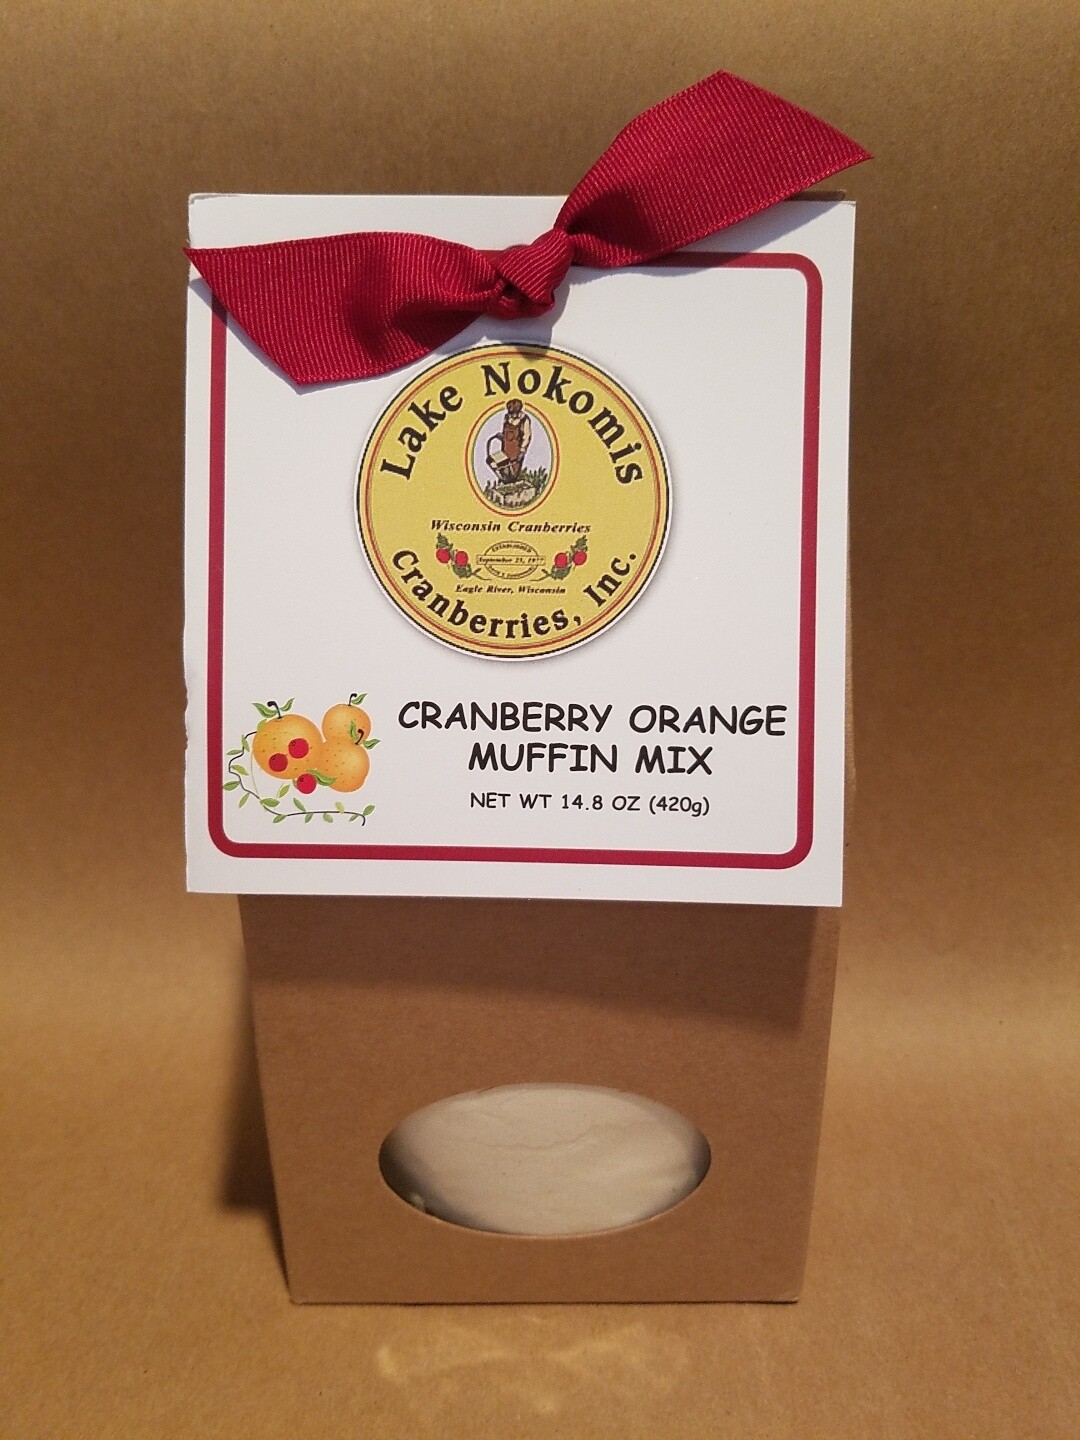 Cranberry Orange Muffin Mix LNC